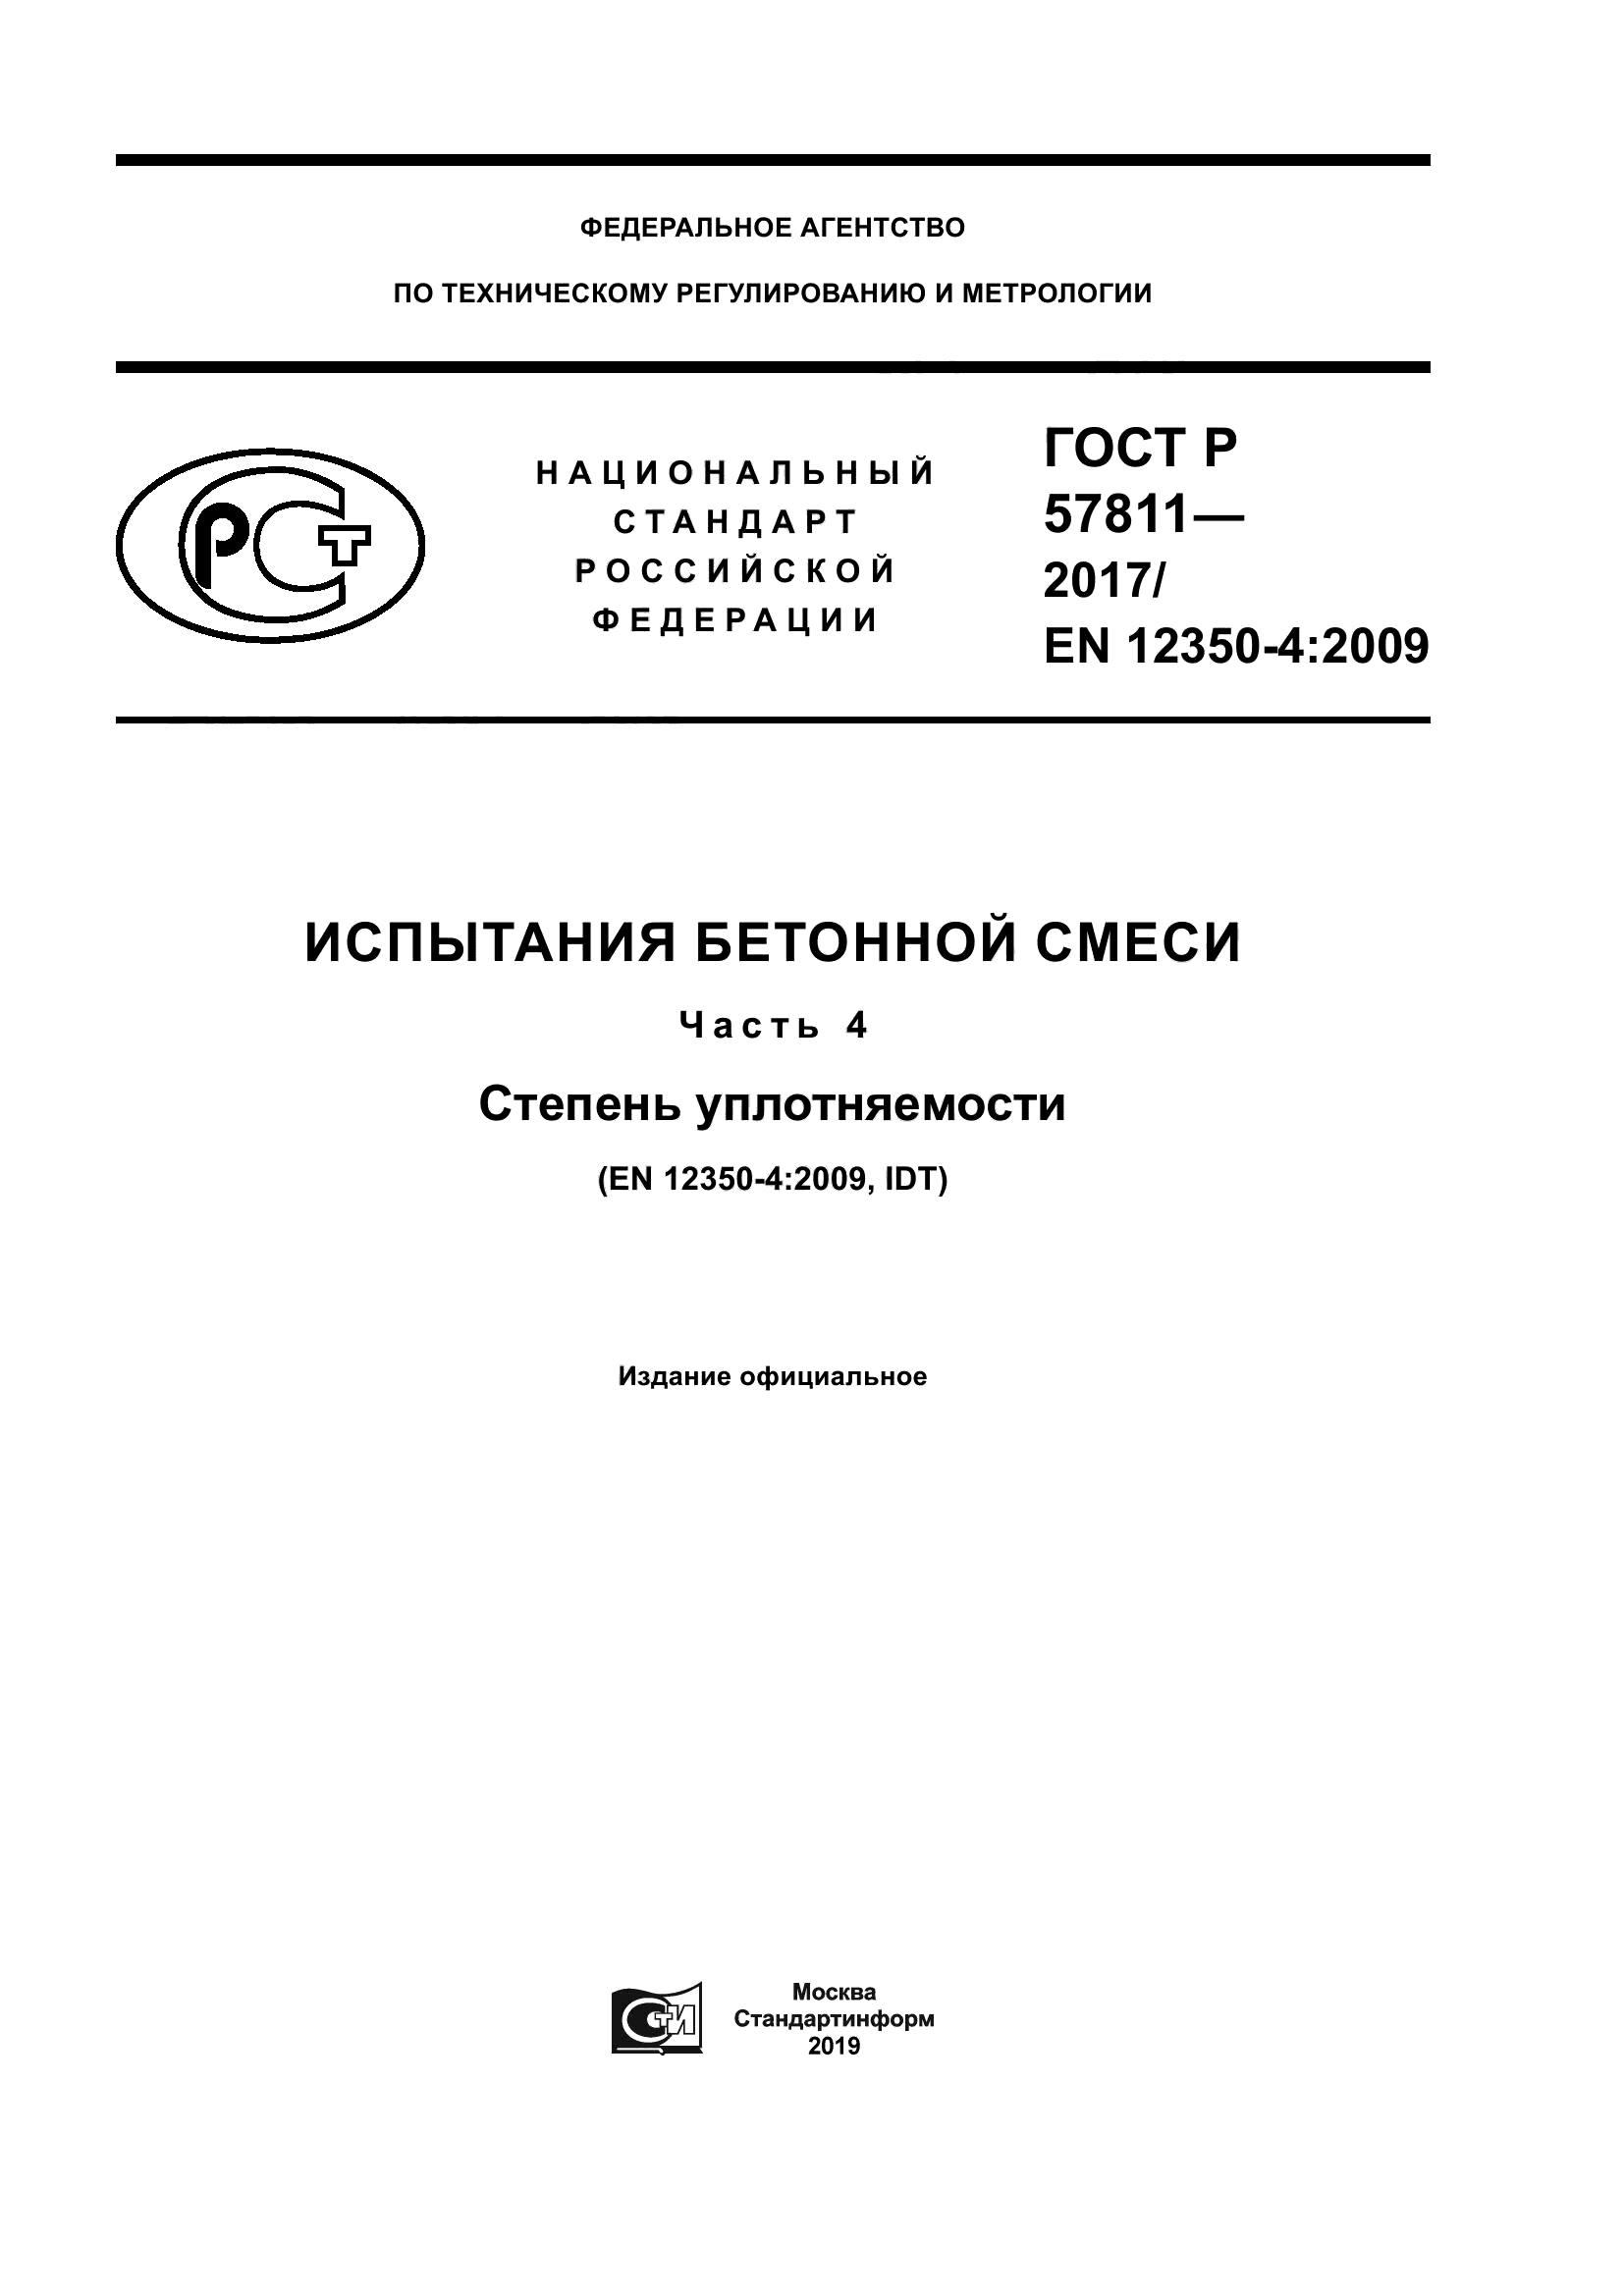 ГОСТ Р 57811-2017